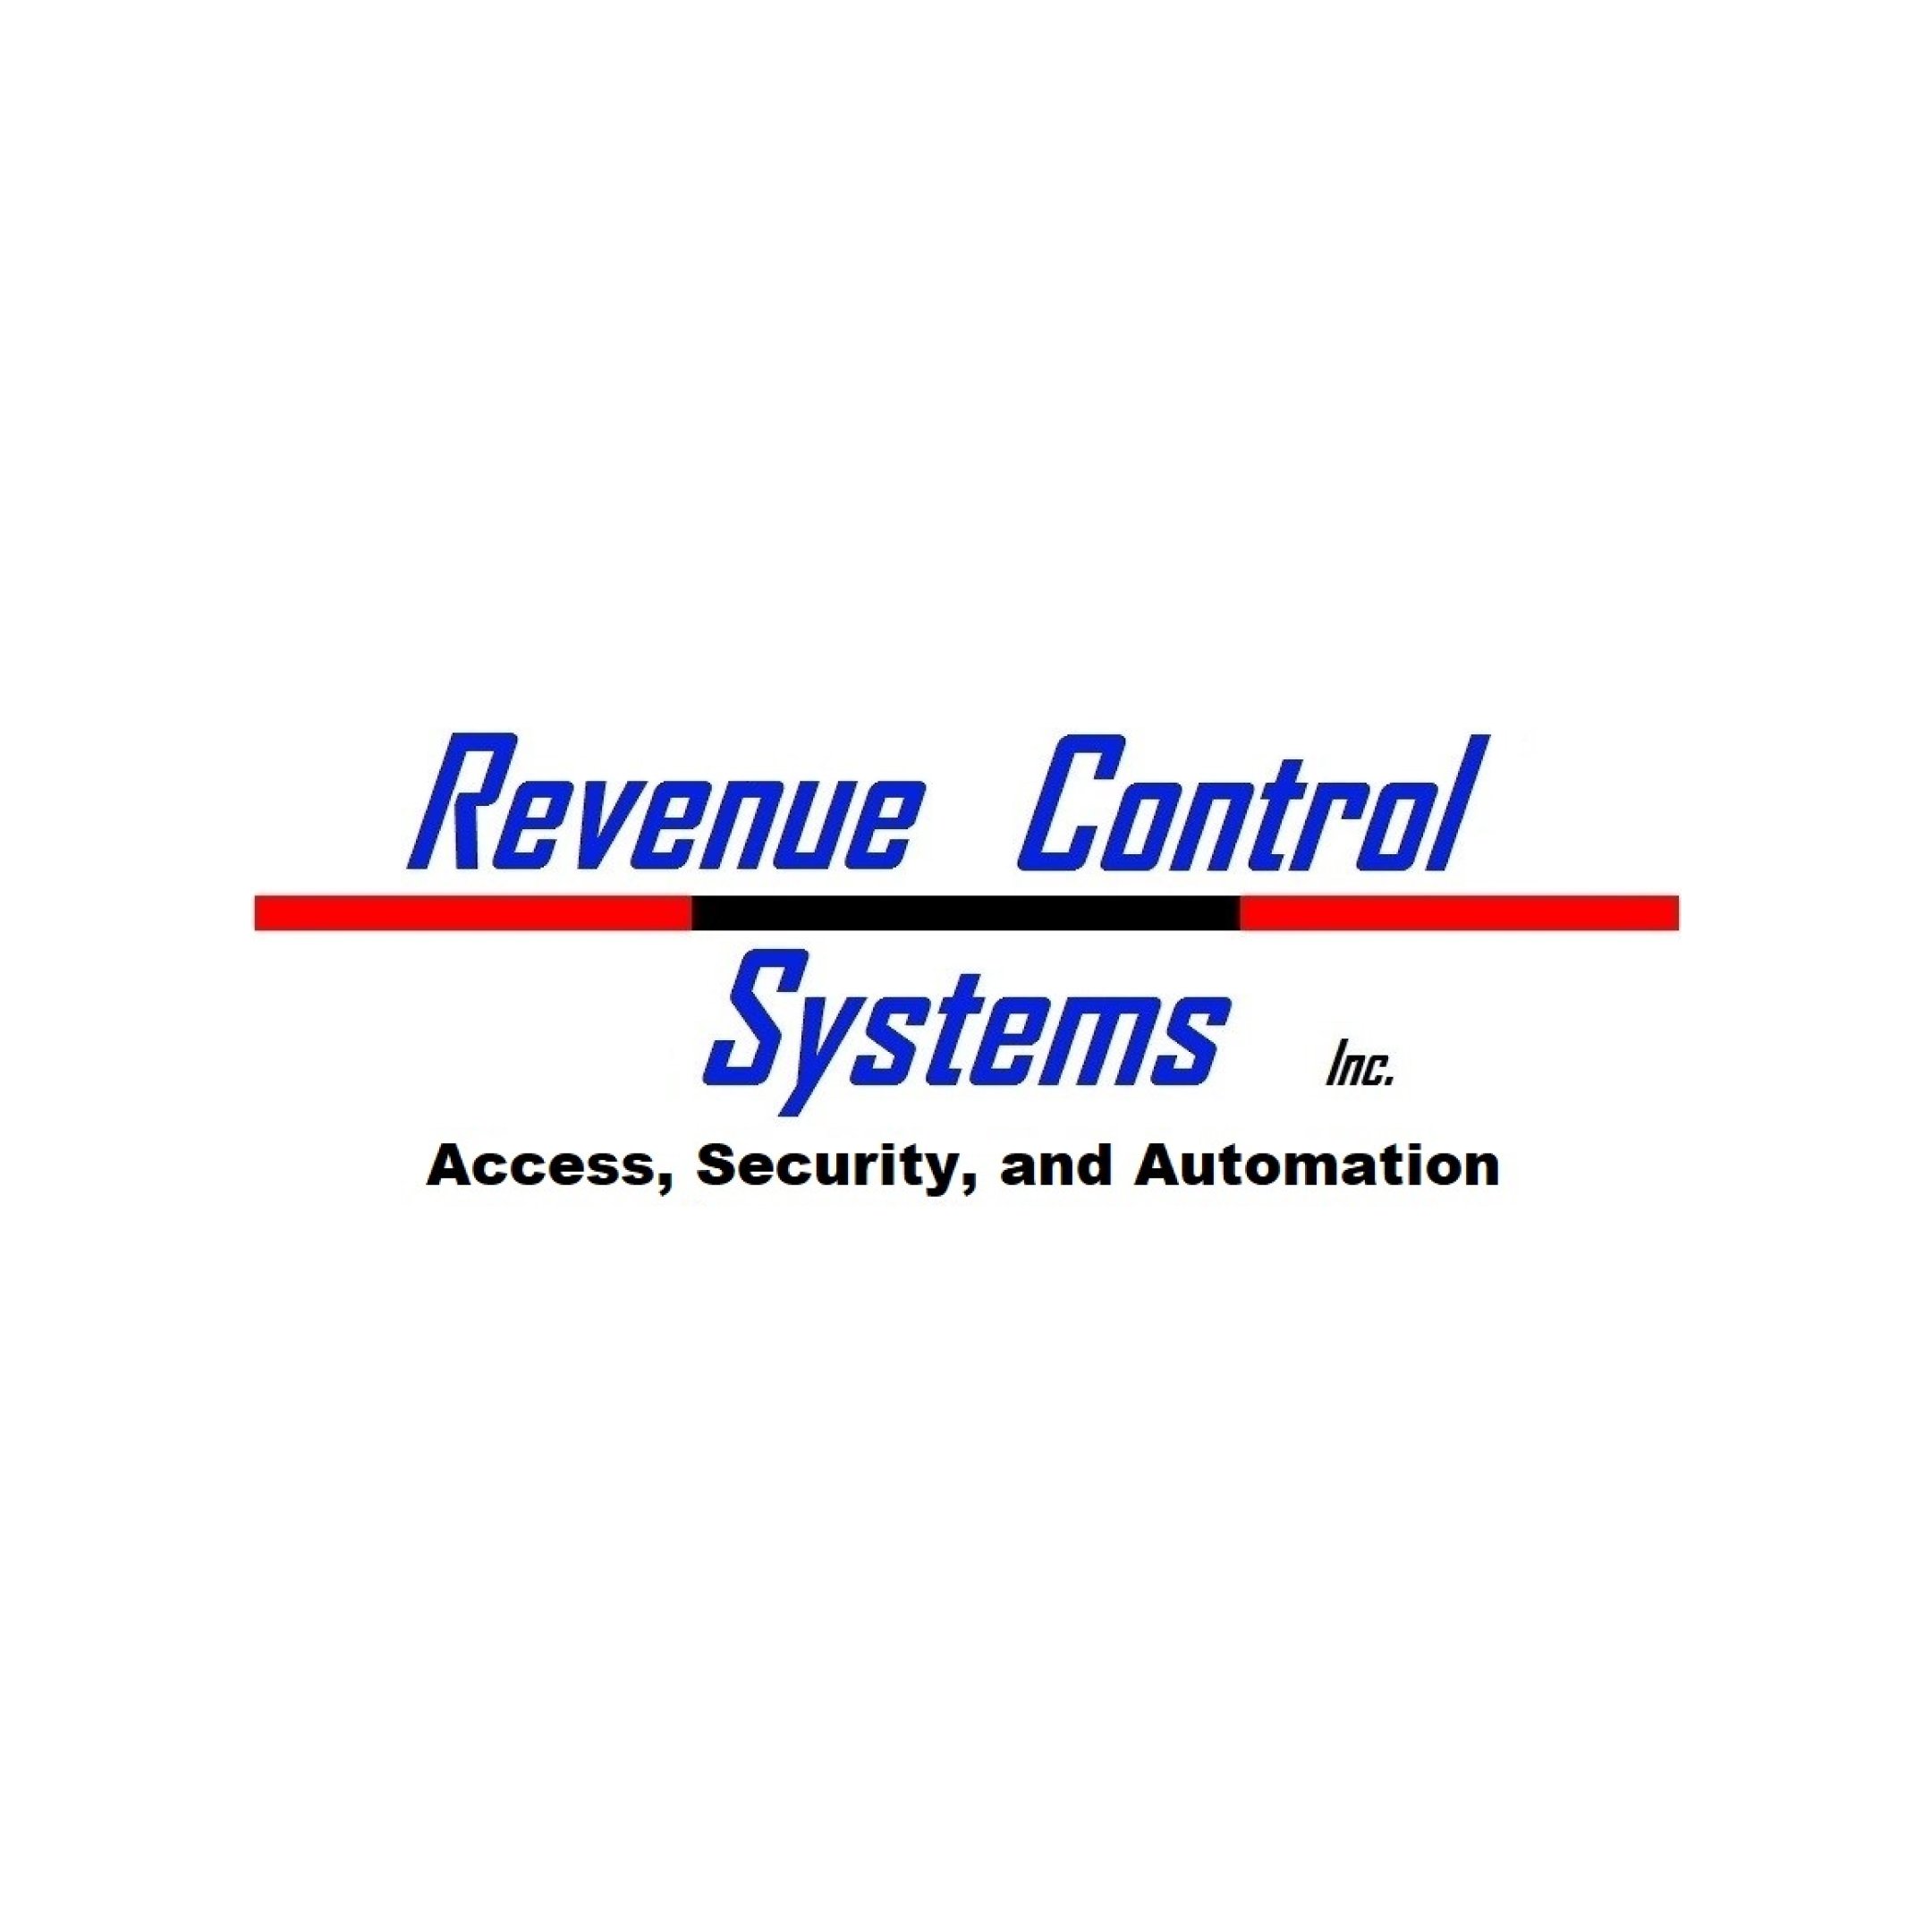 RCS - Revenue Control Systems